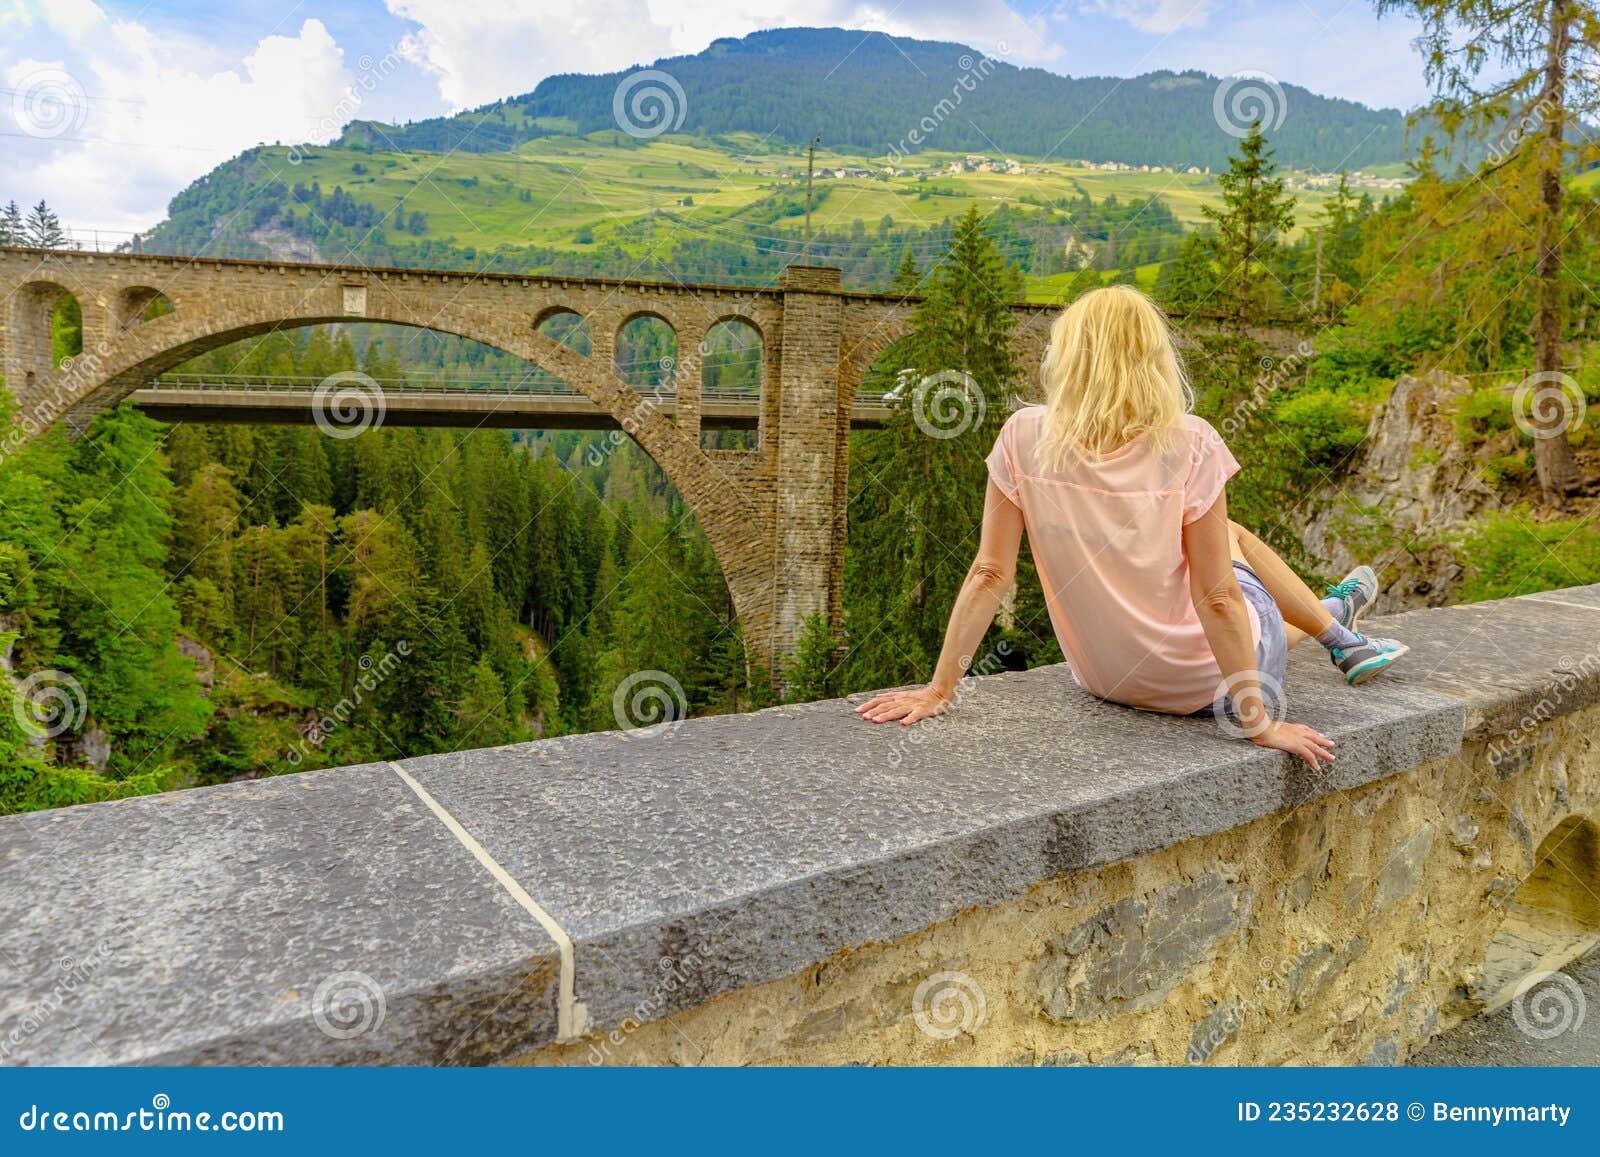 woman on solis viaduct of swiss railway